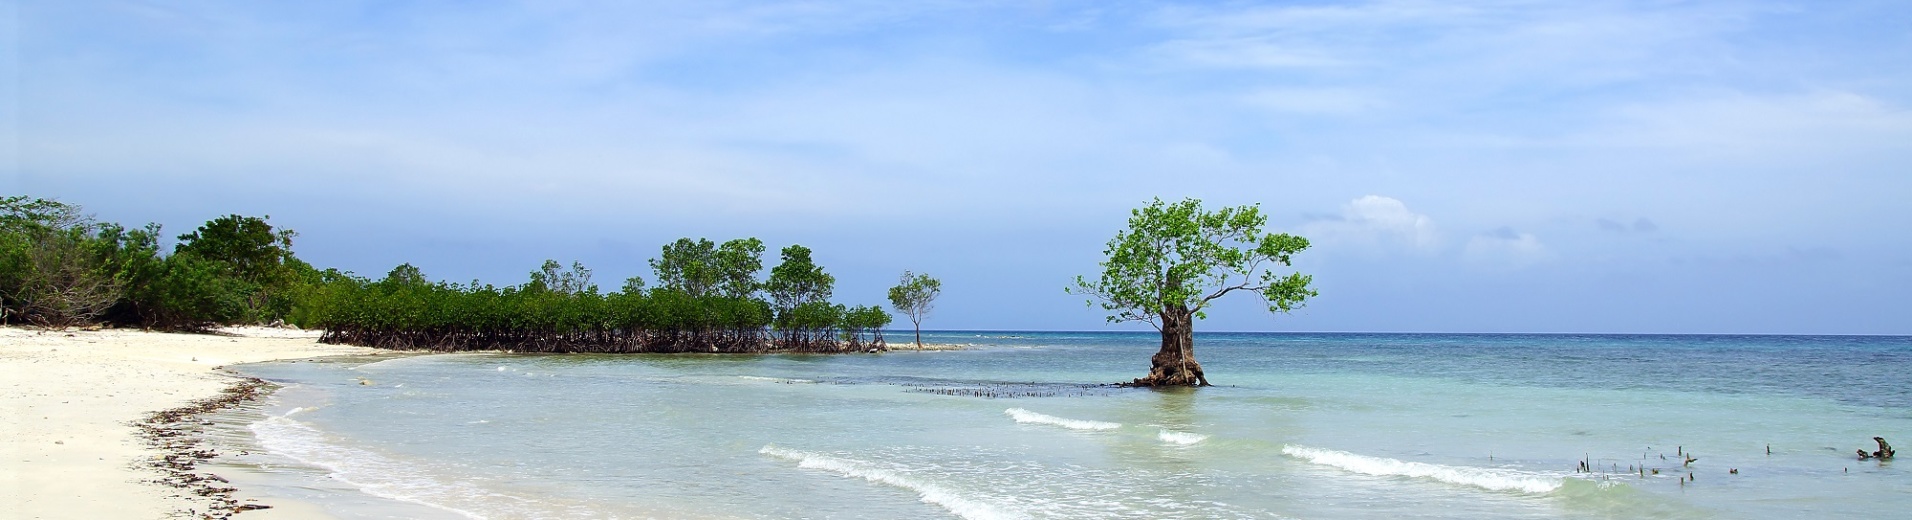 Plage et mangrove sur Siquijor island